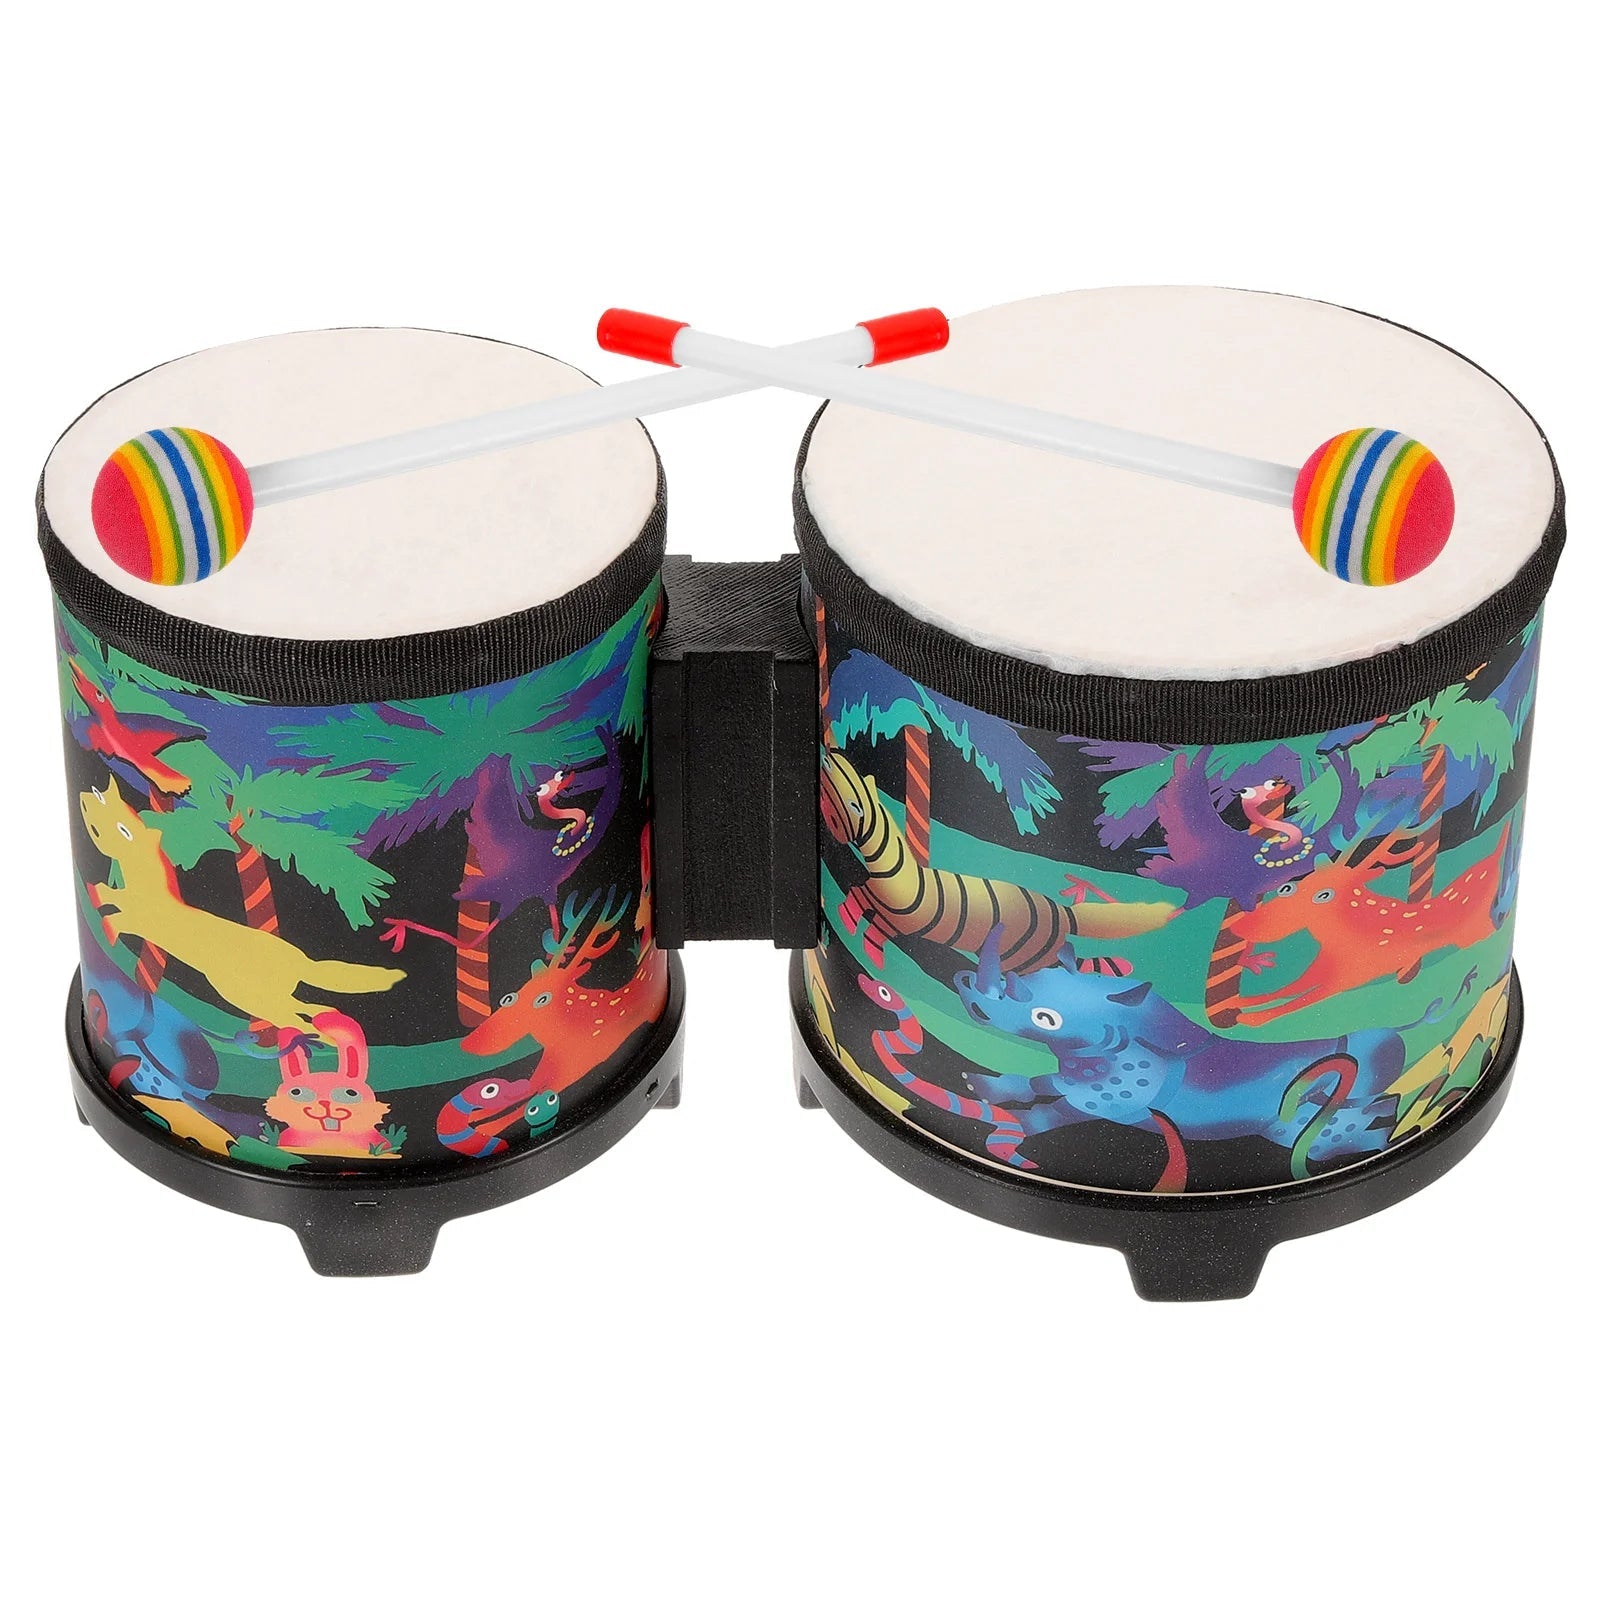 Toys Bongo Drums Adults Kids Ages 5-9 Percussion Instruments Aldult - ToylandEU